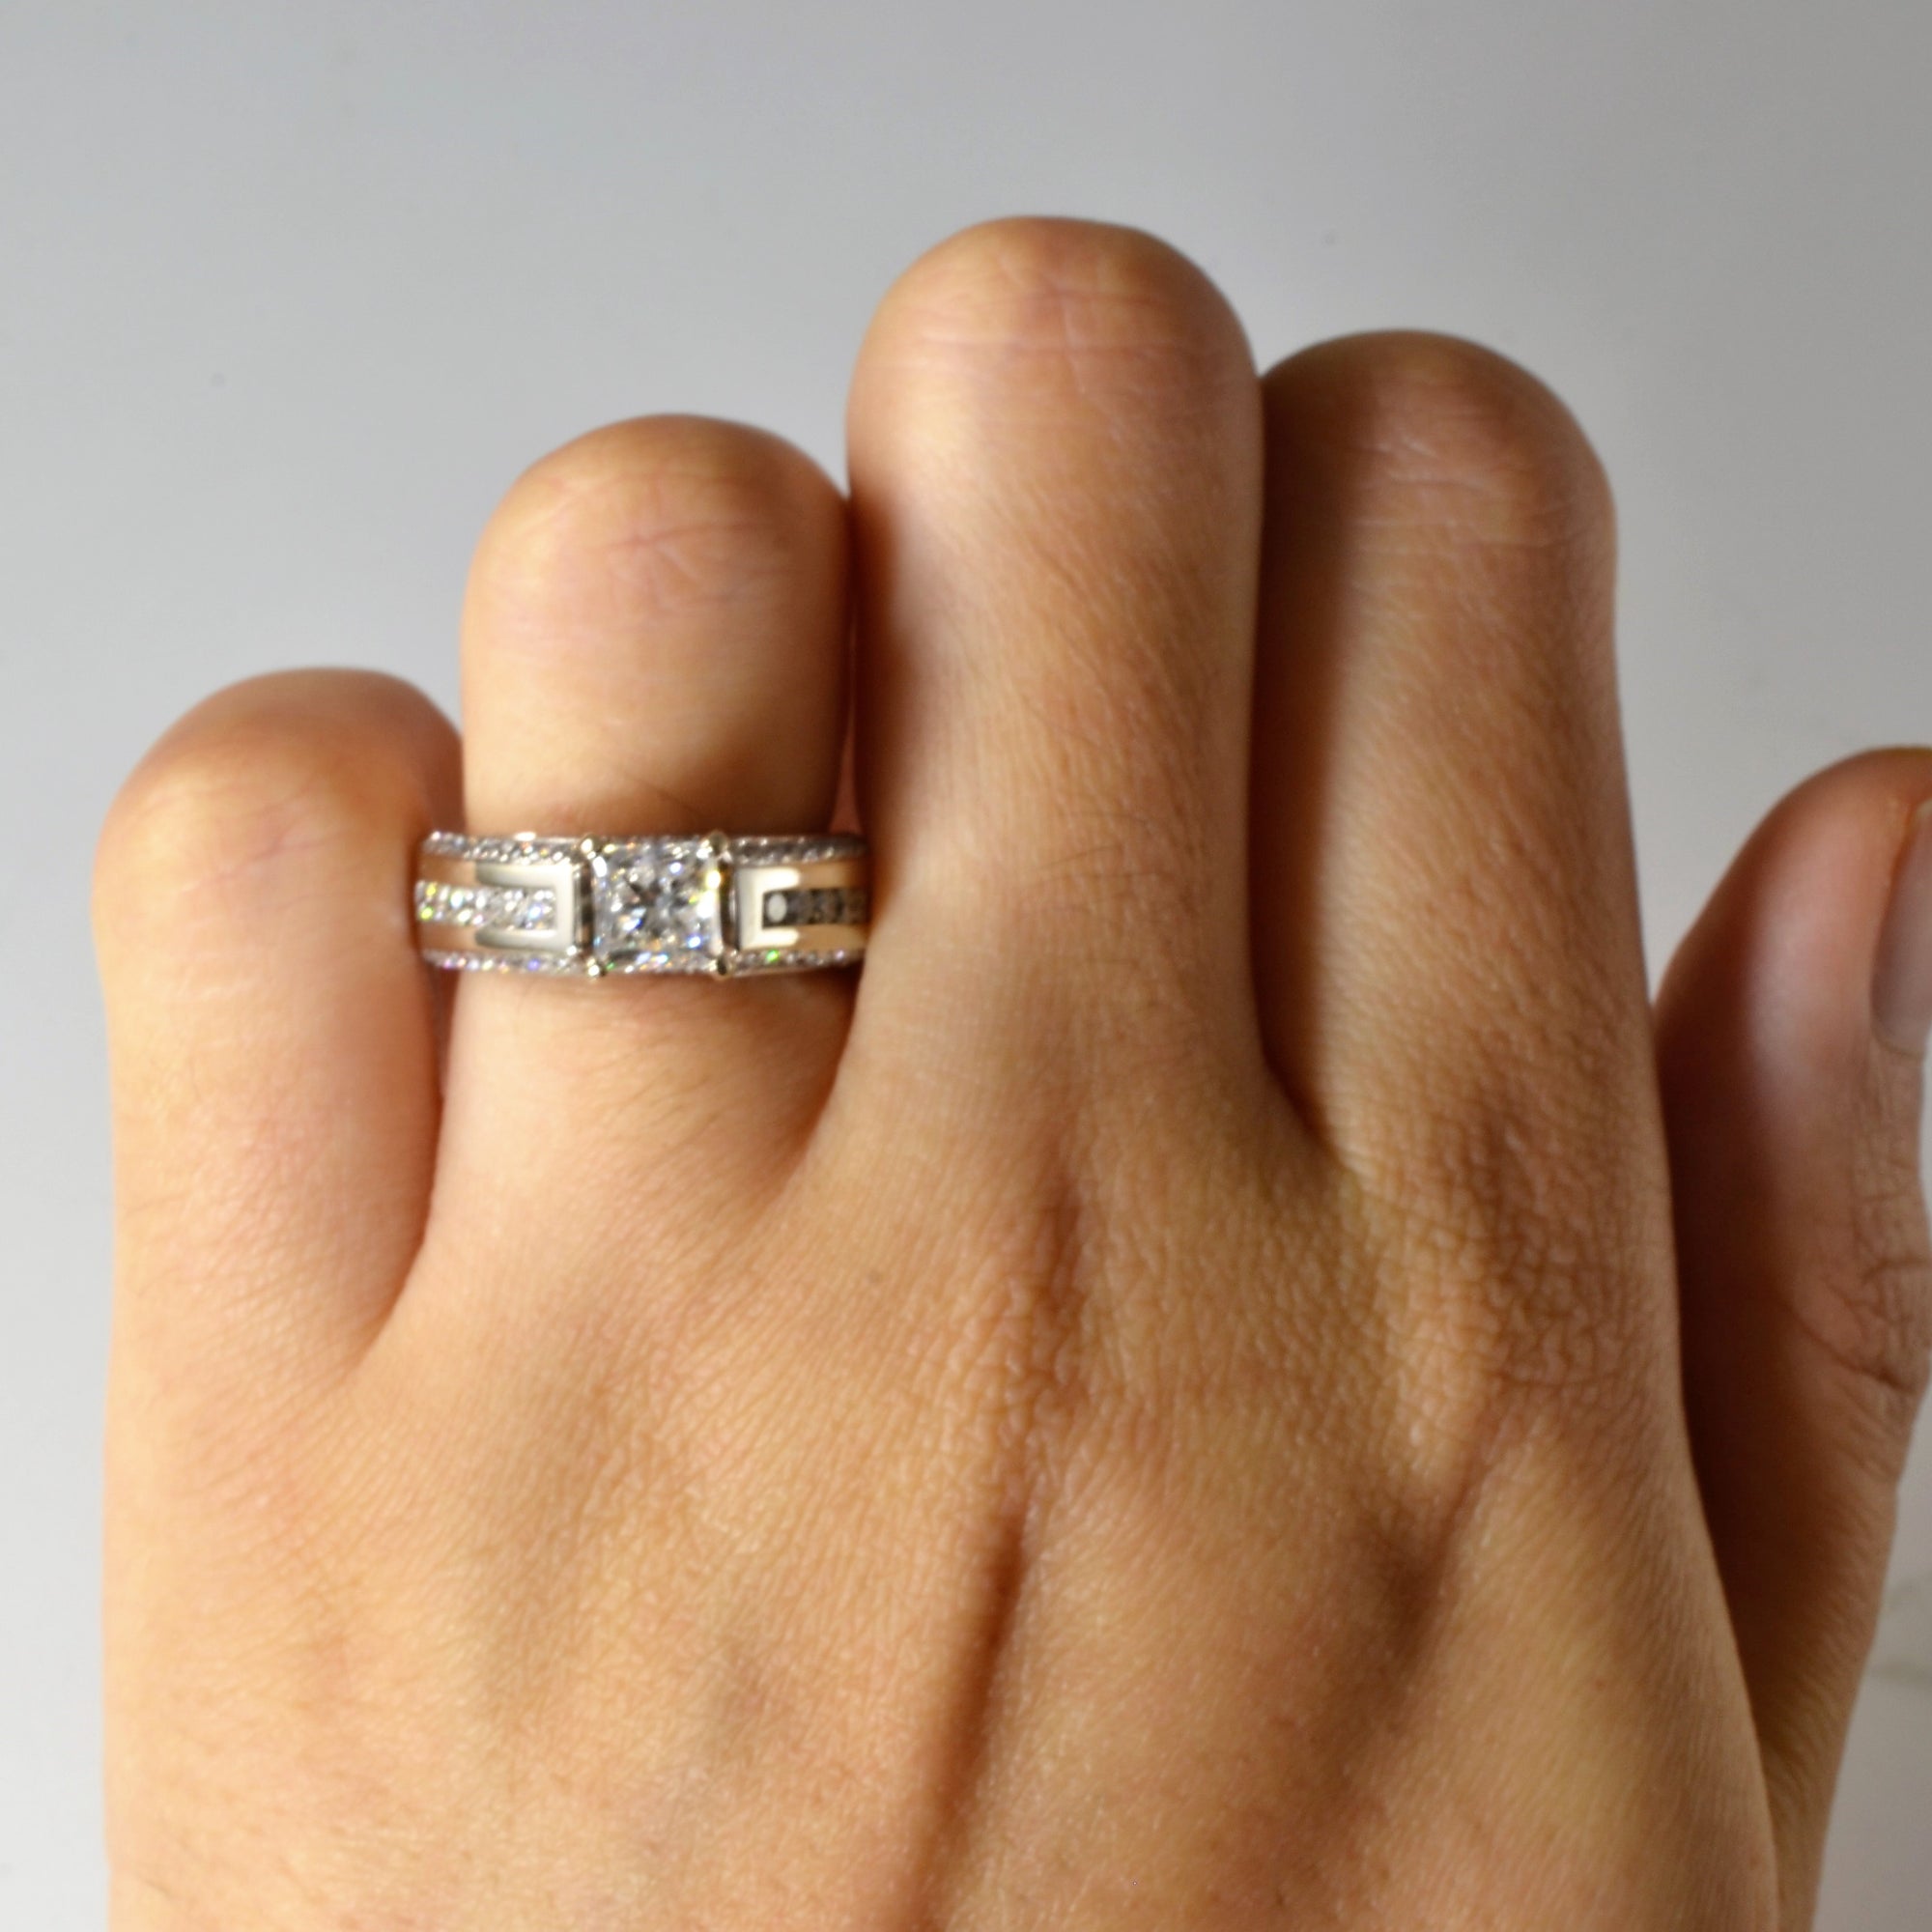 Canadian Princess Diamond Engagement Ring | 1.84ctw | SZ 5.5 |